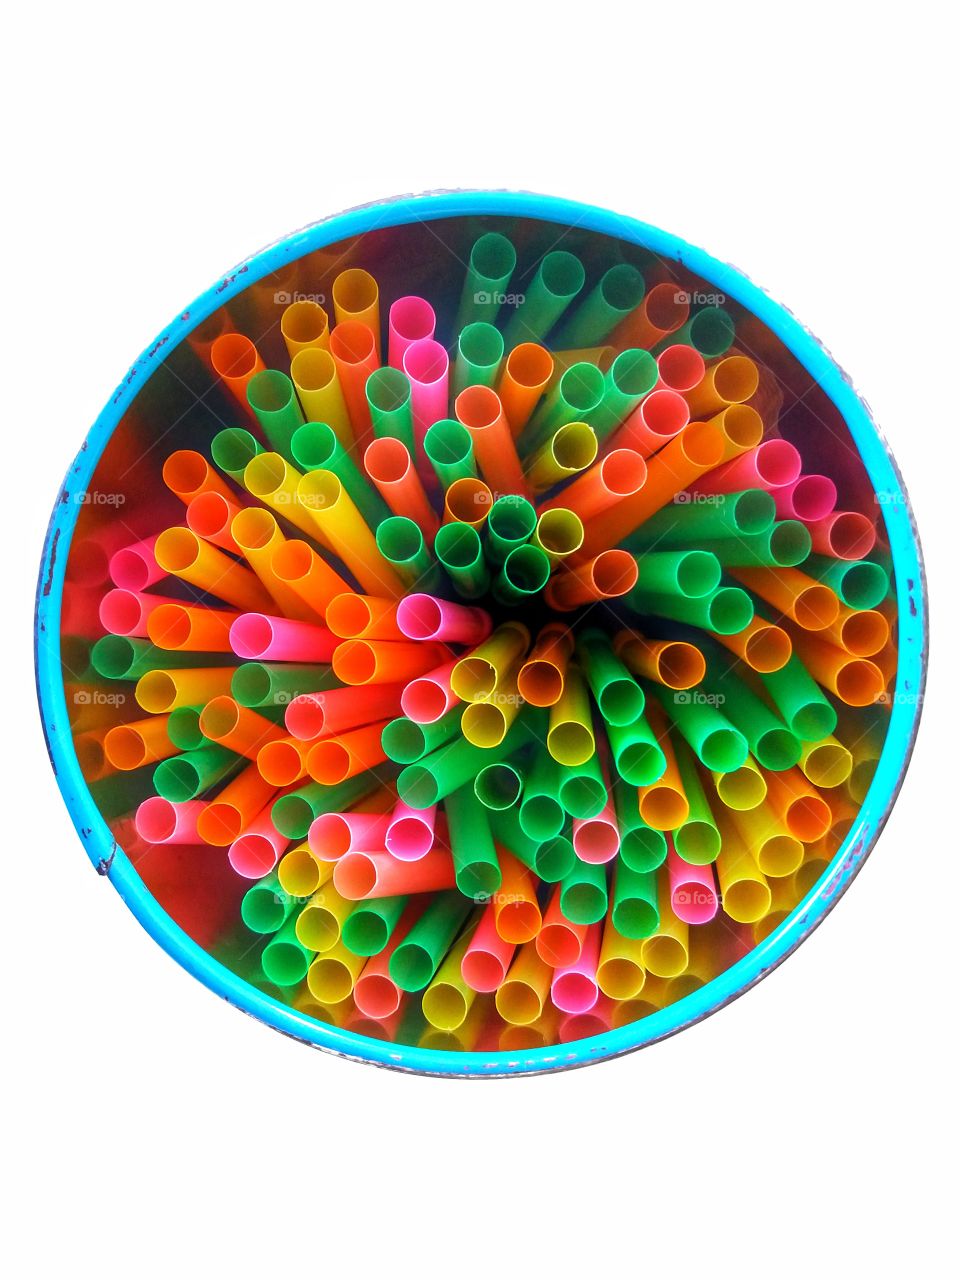 Colorful straws!